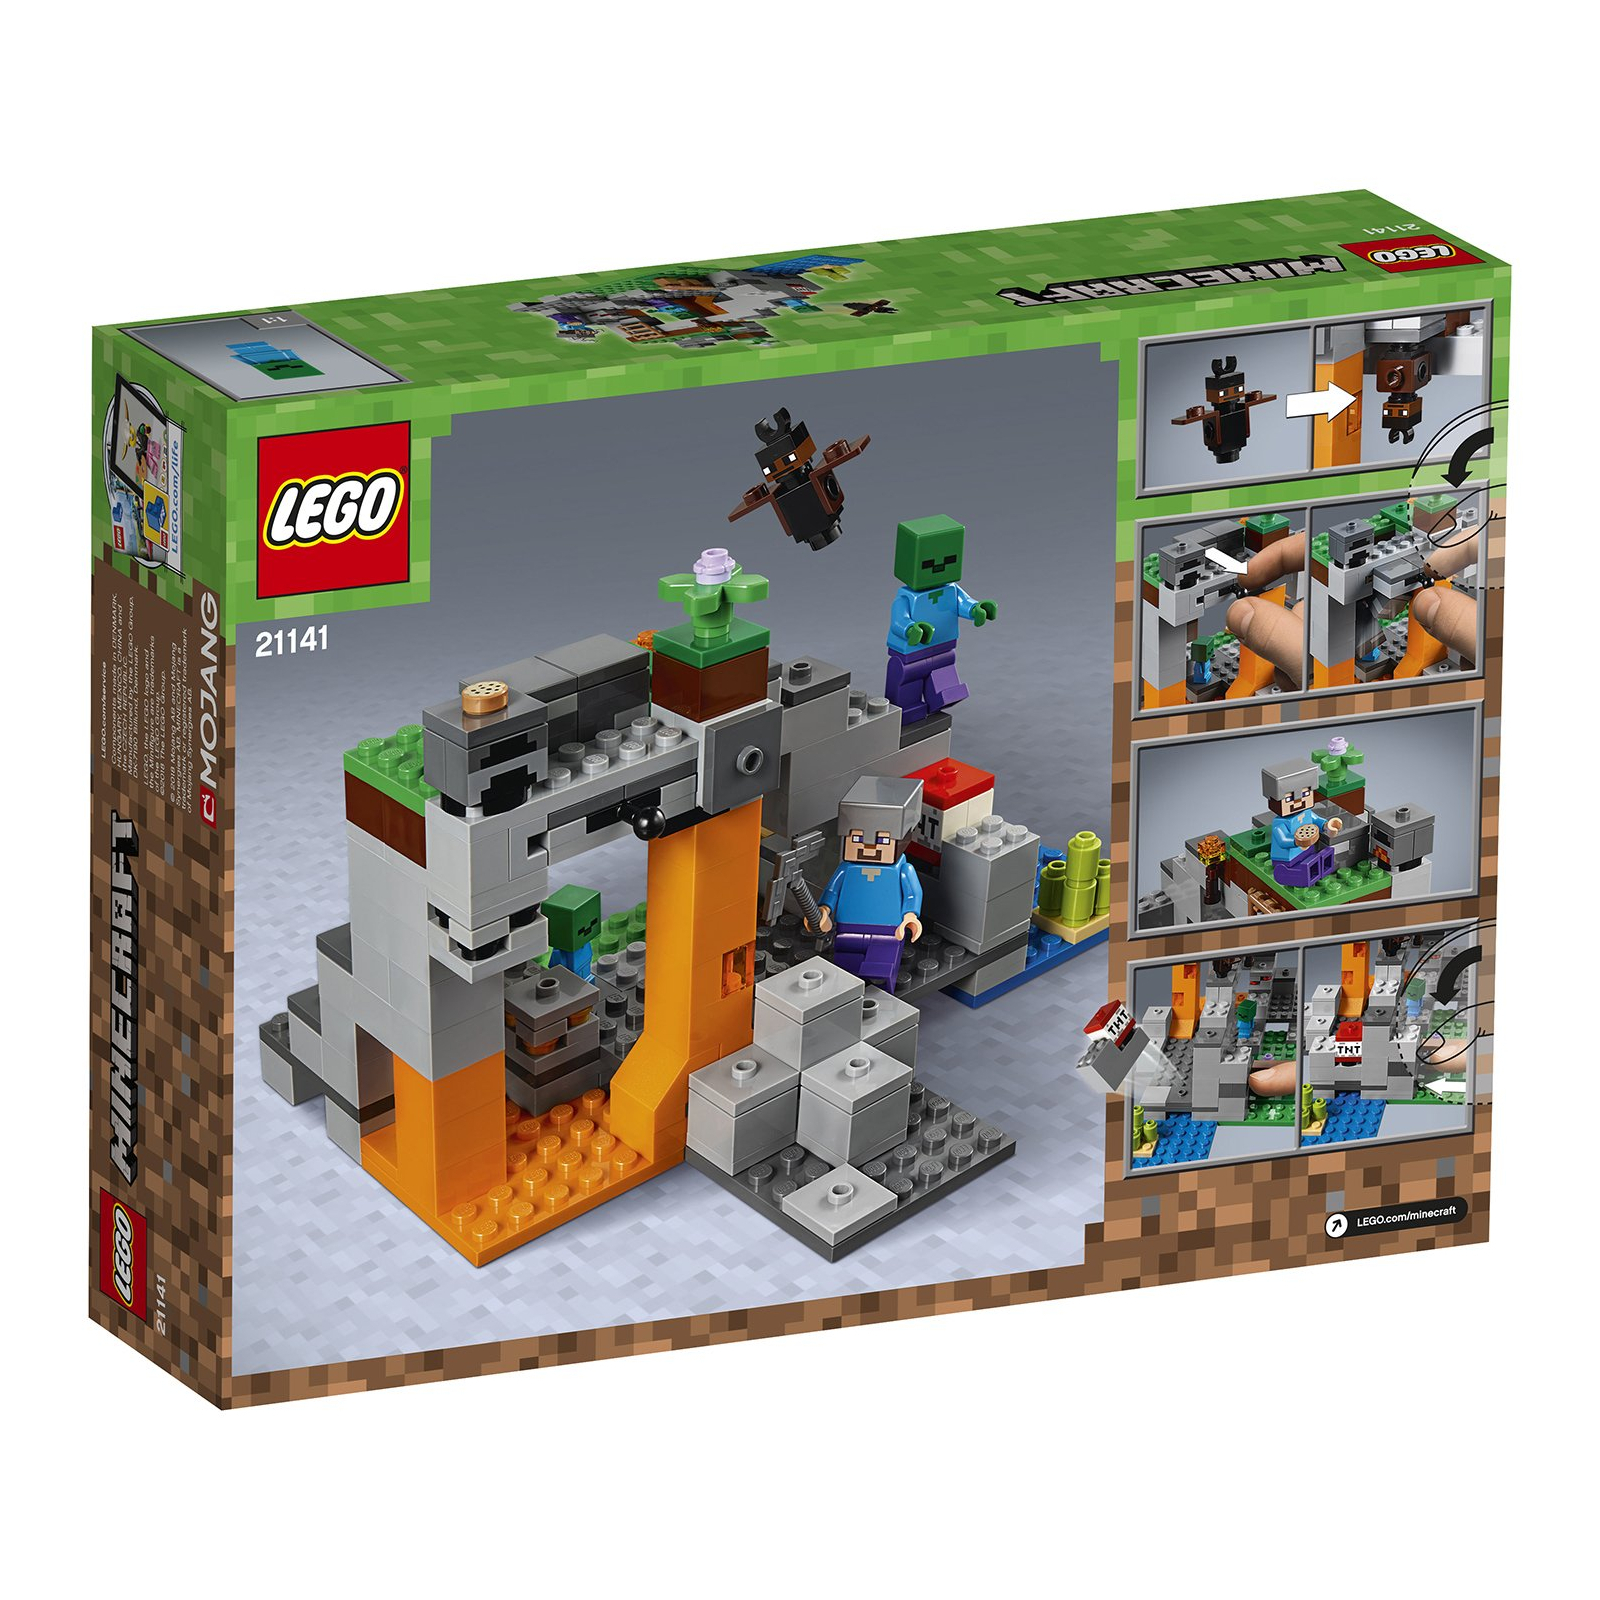 Конструктор LEGO MINECRAFT Печера зомбі 241 деталь (21141) зображення 10